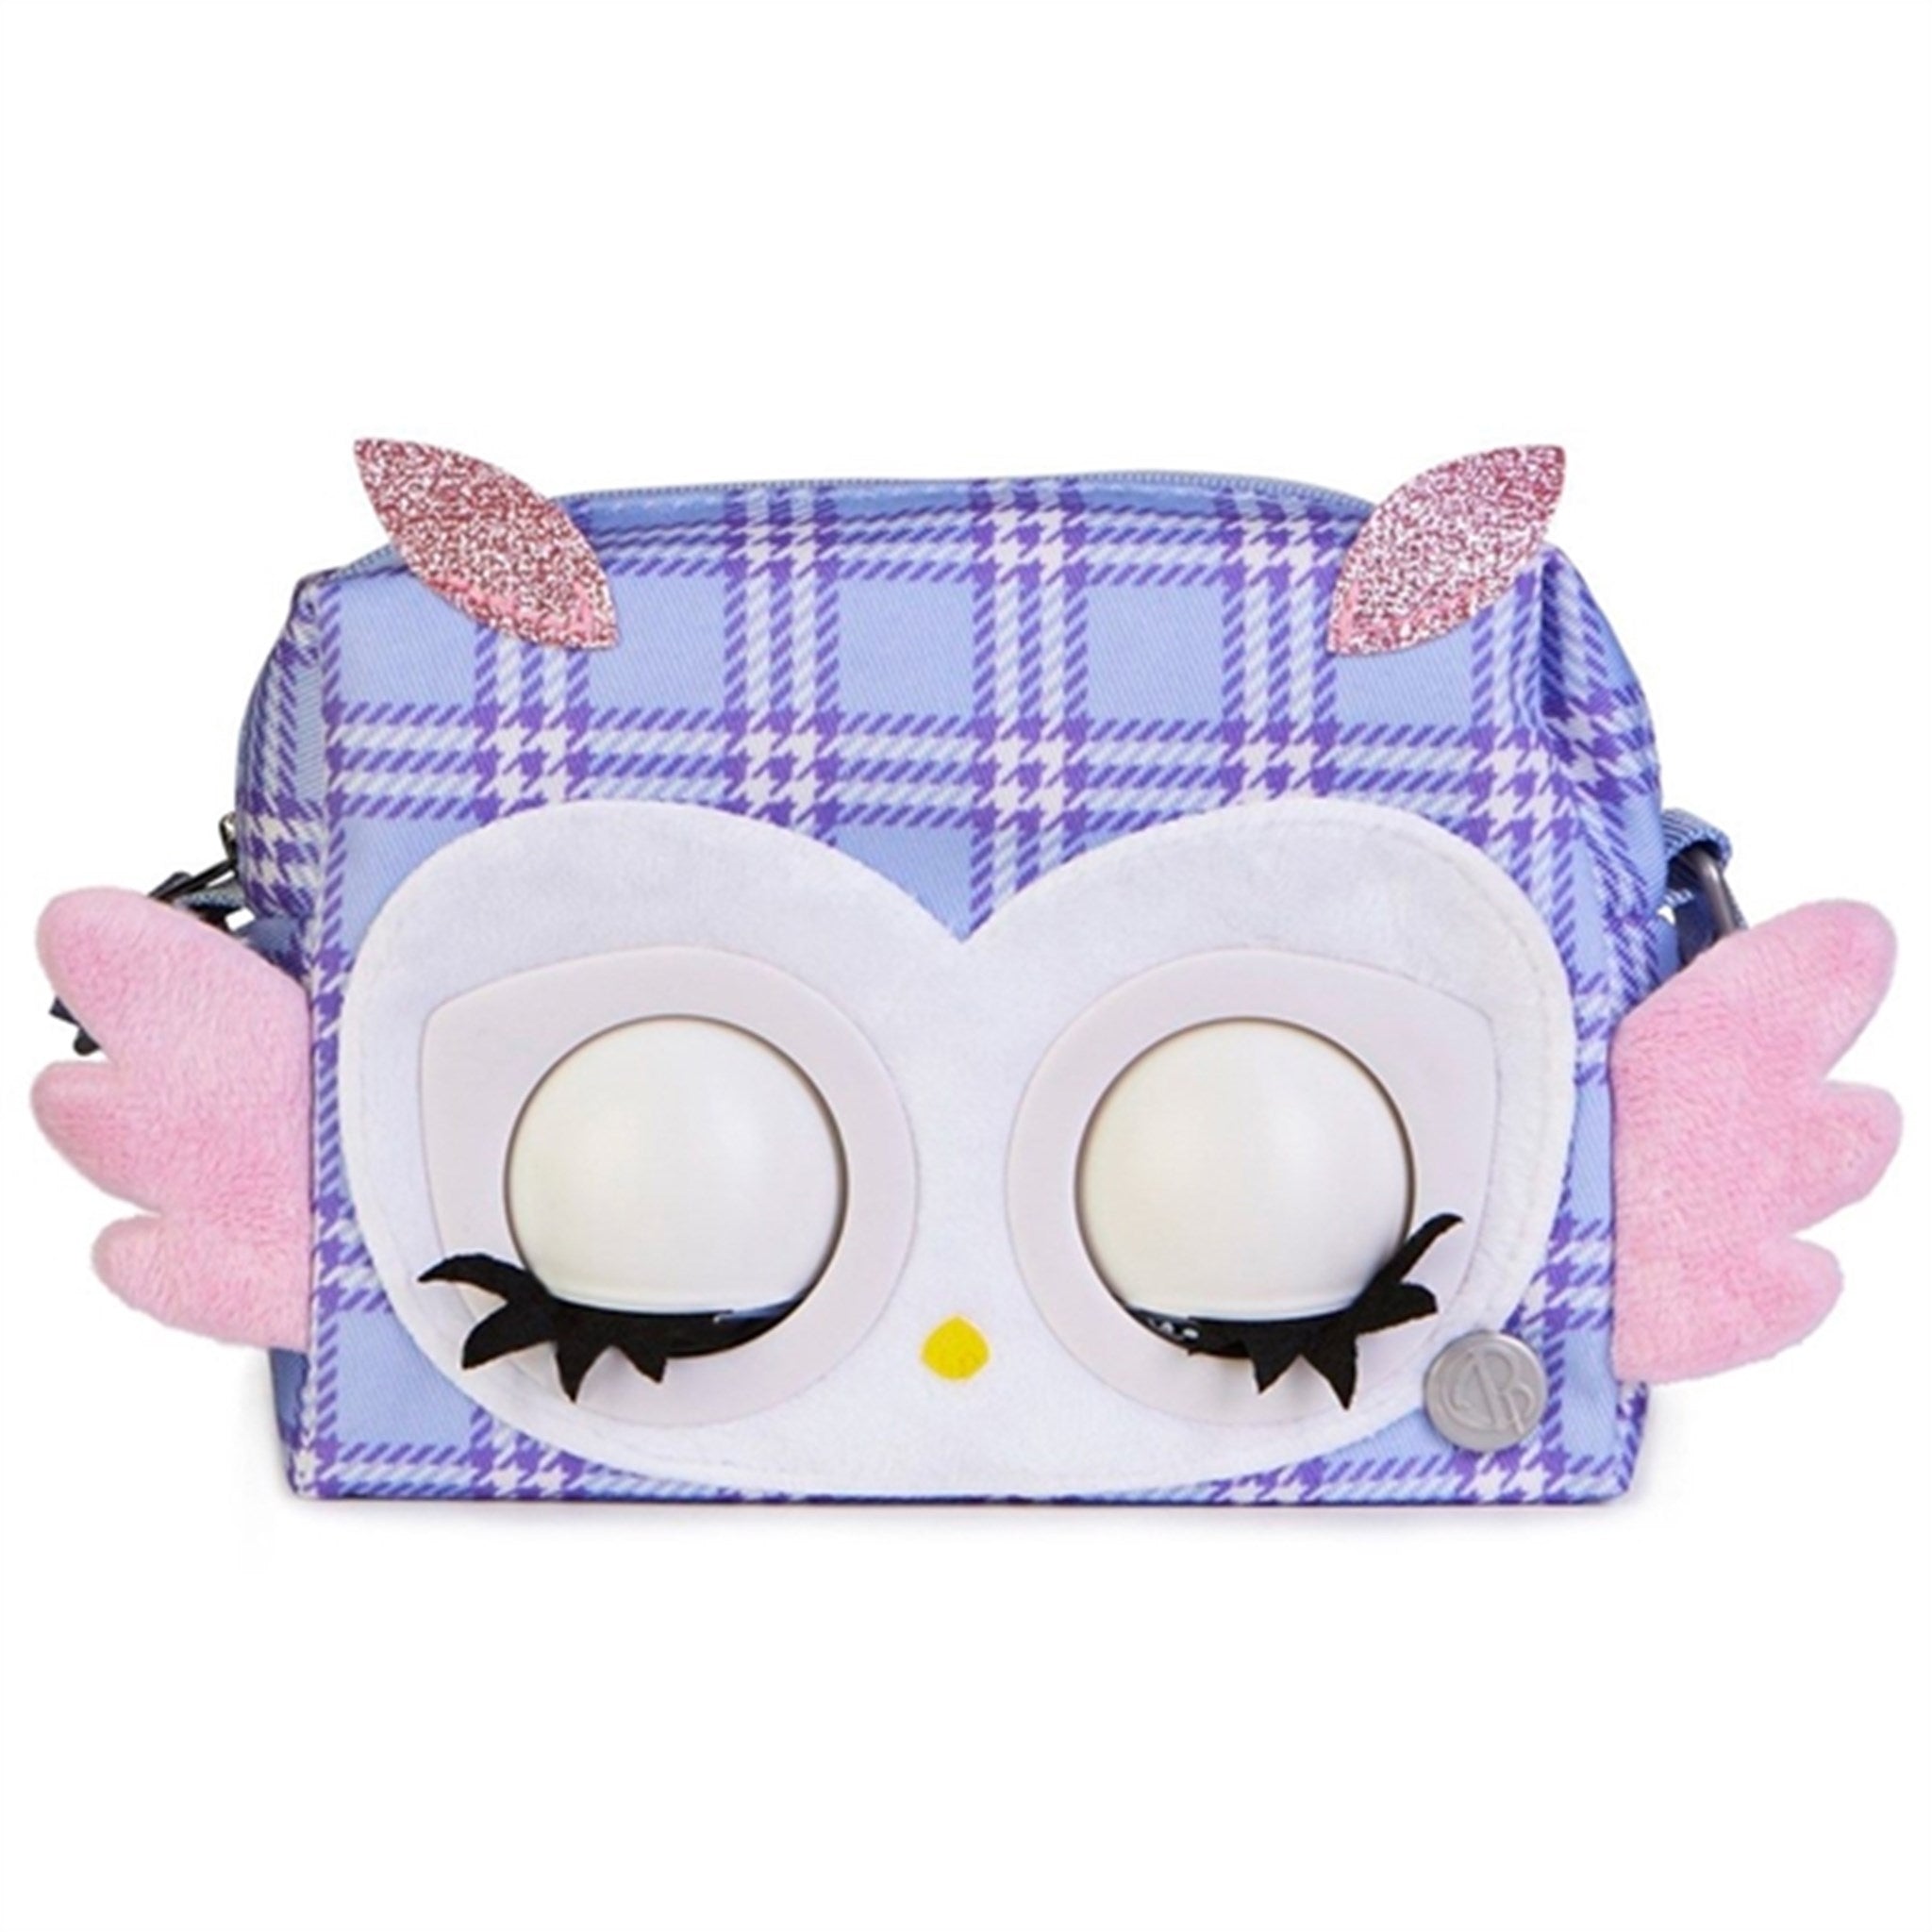 Purse Pets Bag Print Perfect Owl 2